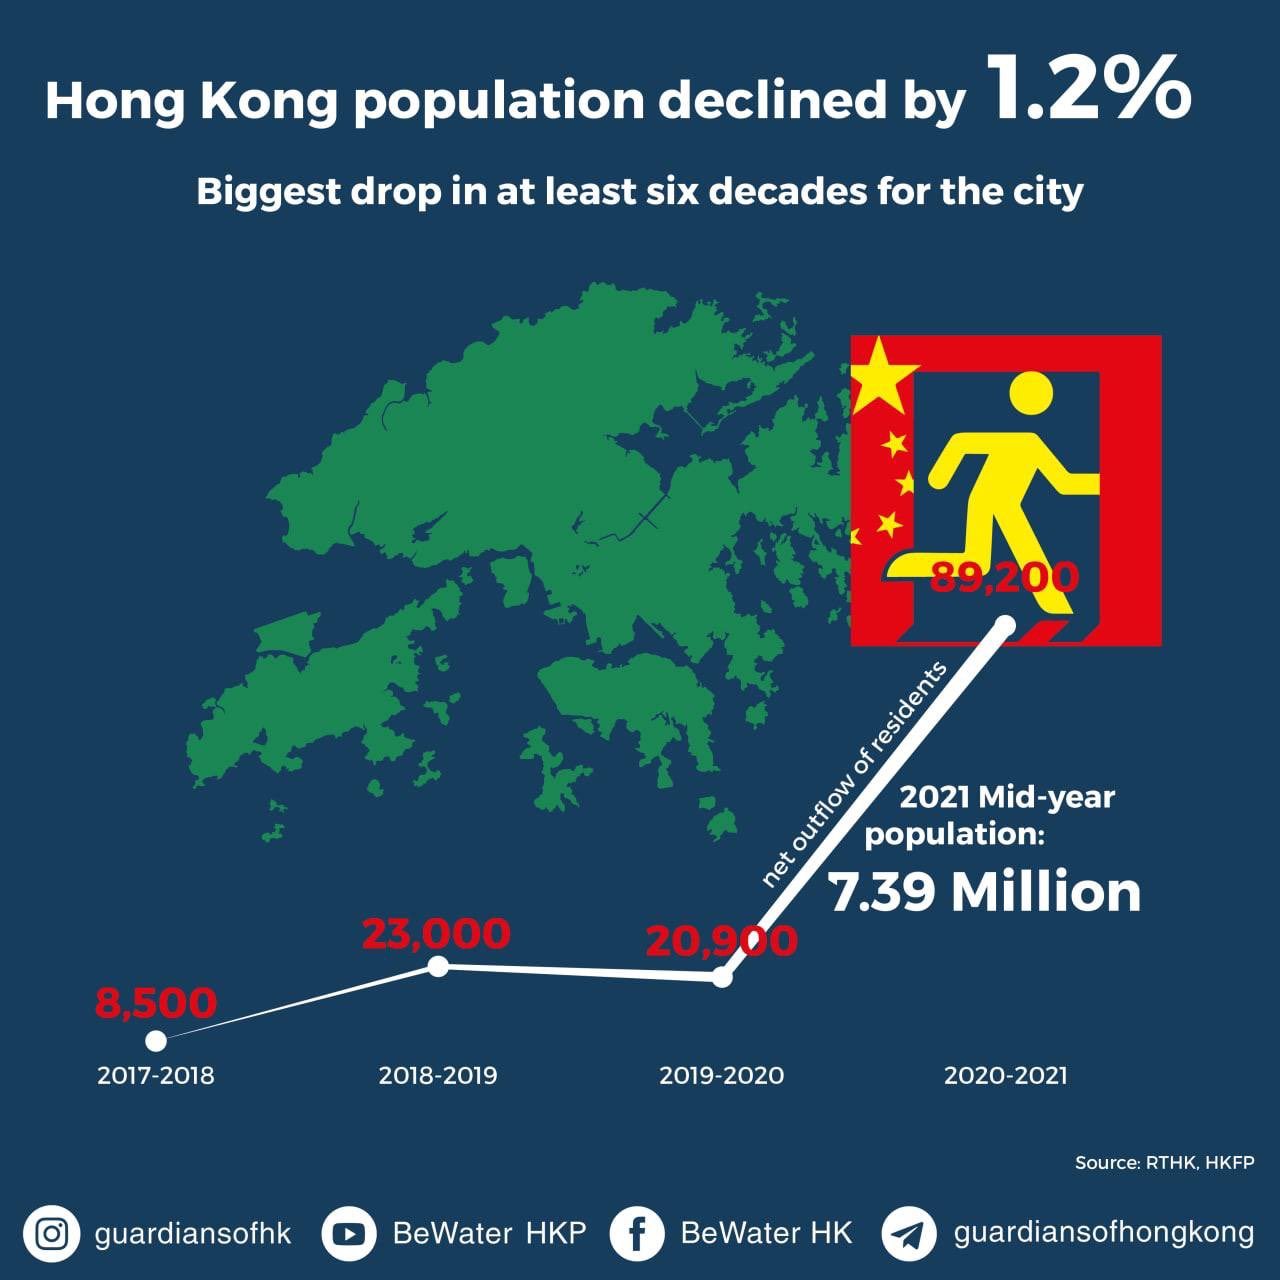 Kong population 2021 hong The population